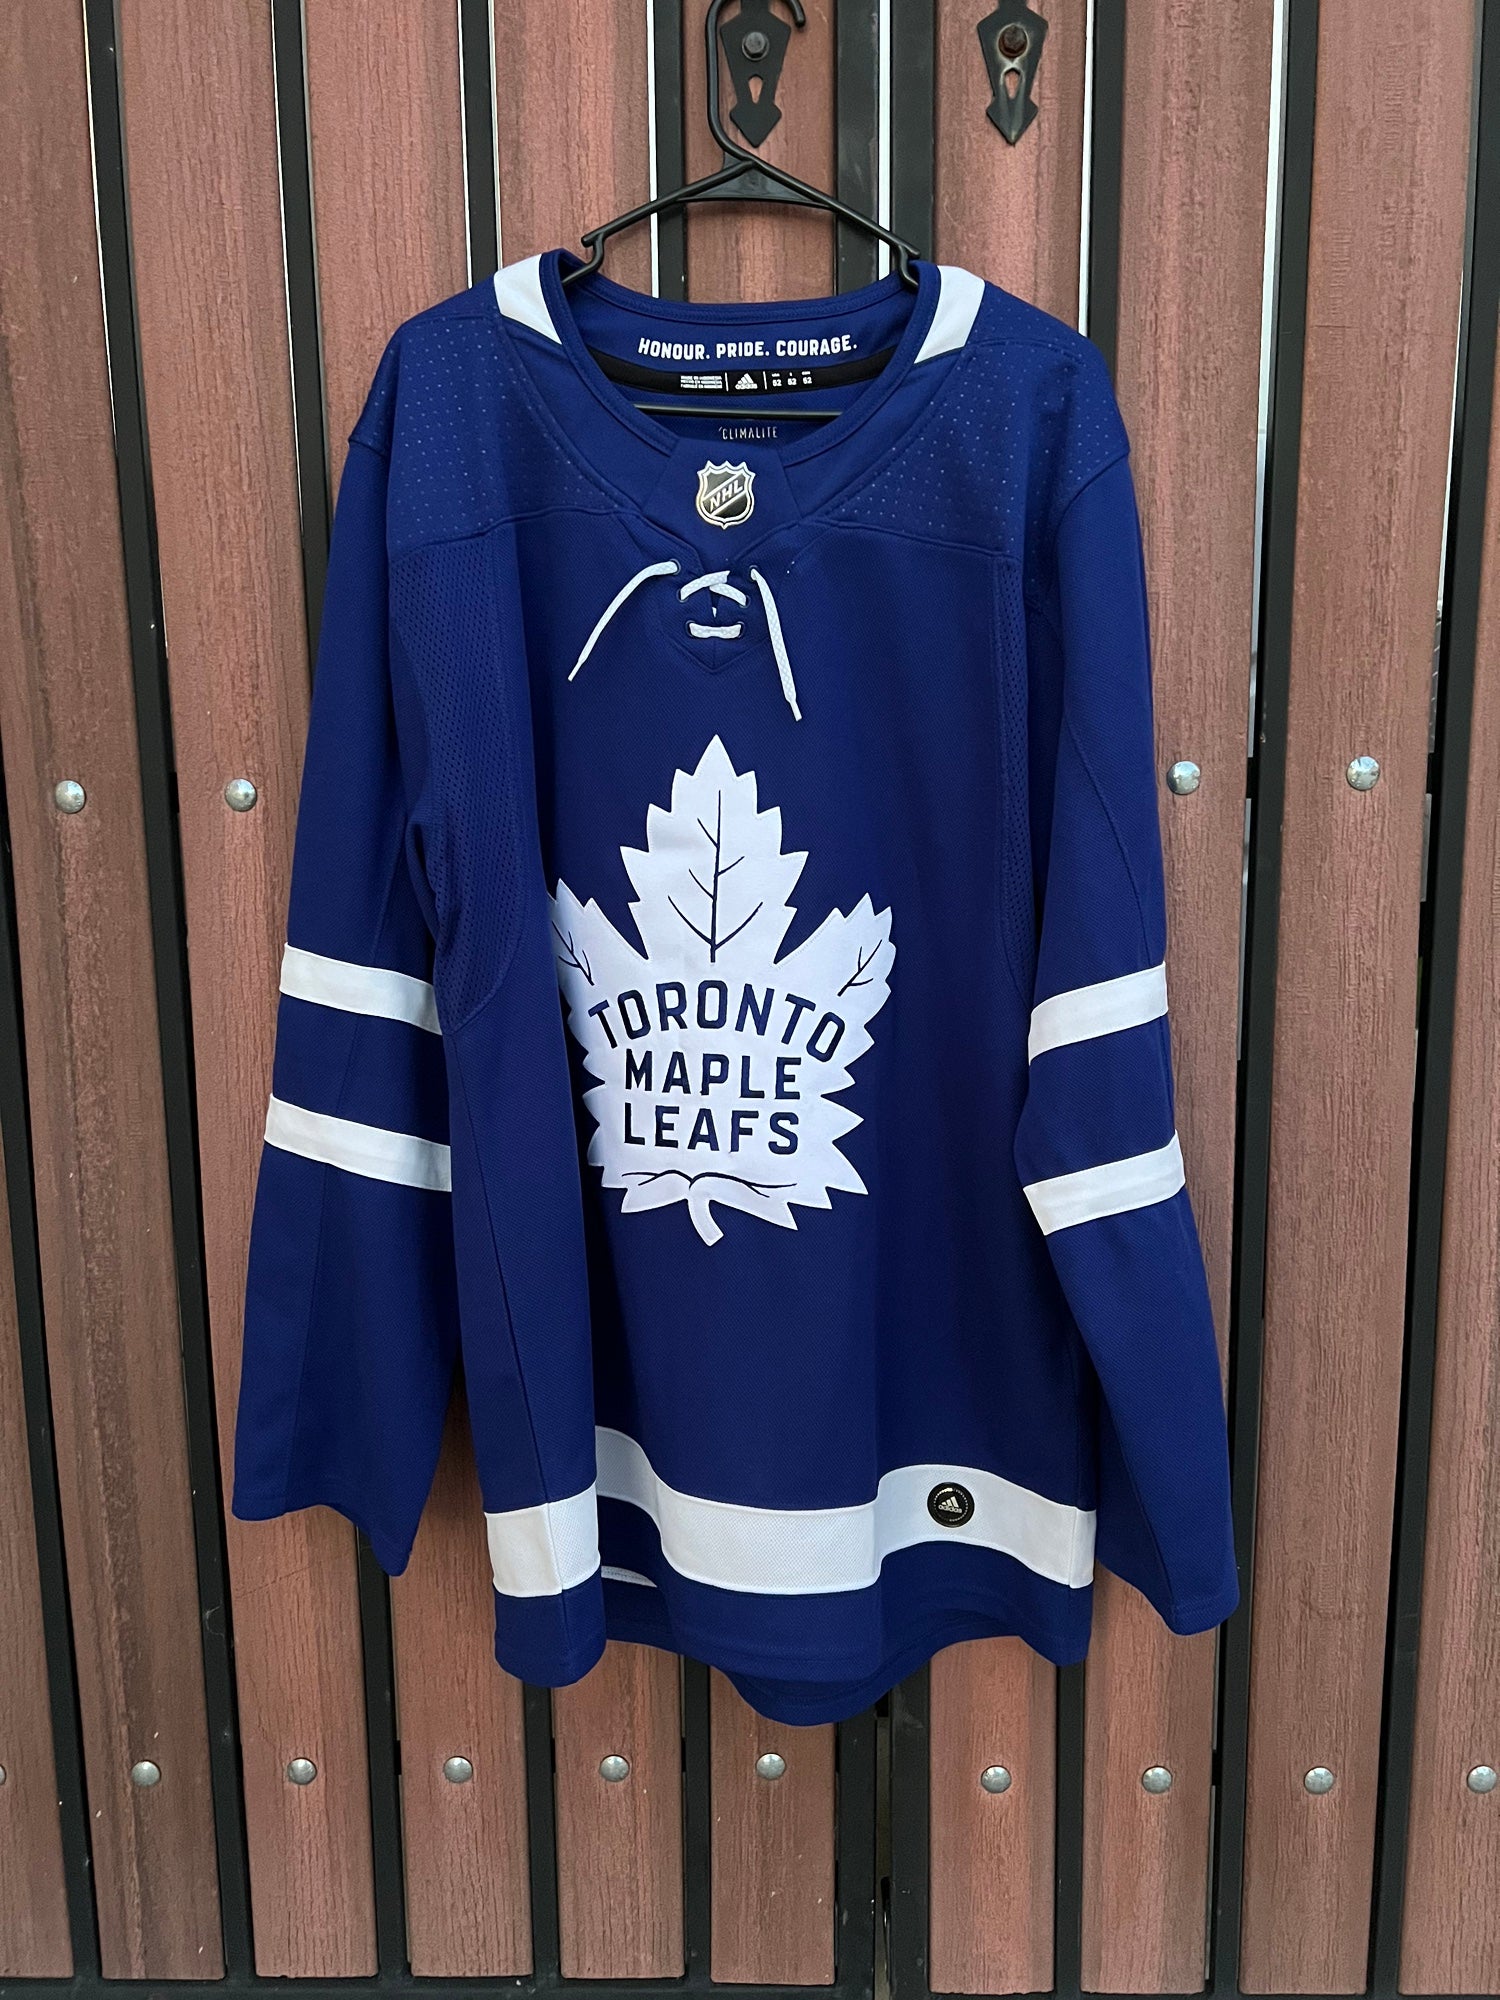 Toronto Maple Leafs Gear